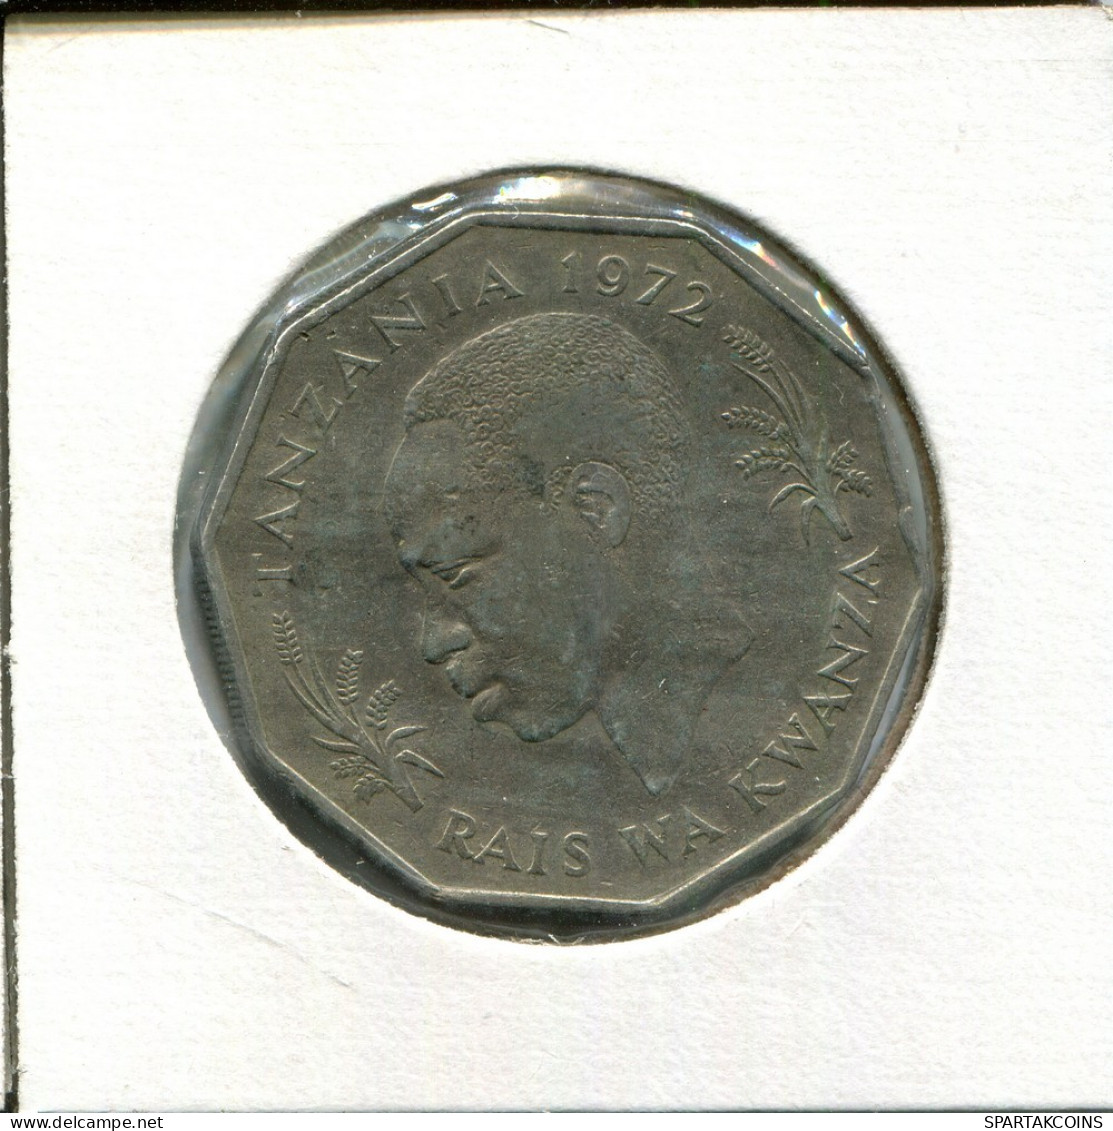 5 SHILLINGI 1972 TANZANIA Moneda #AT980.E.A - Tanzania